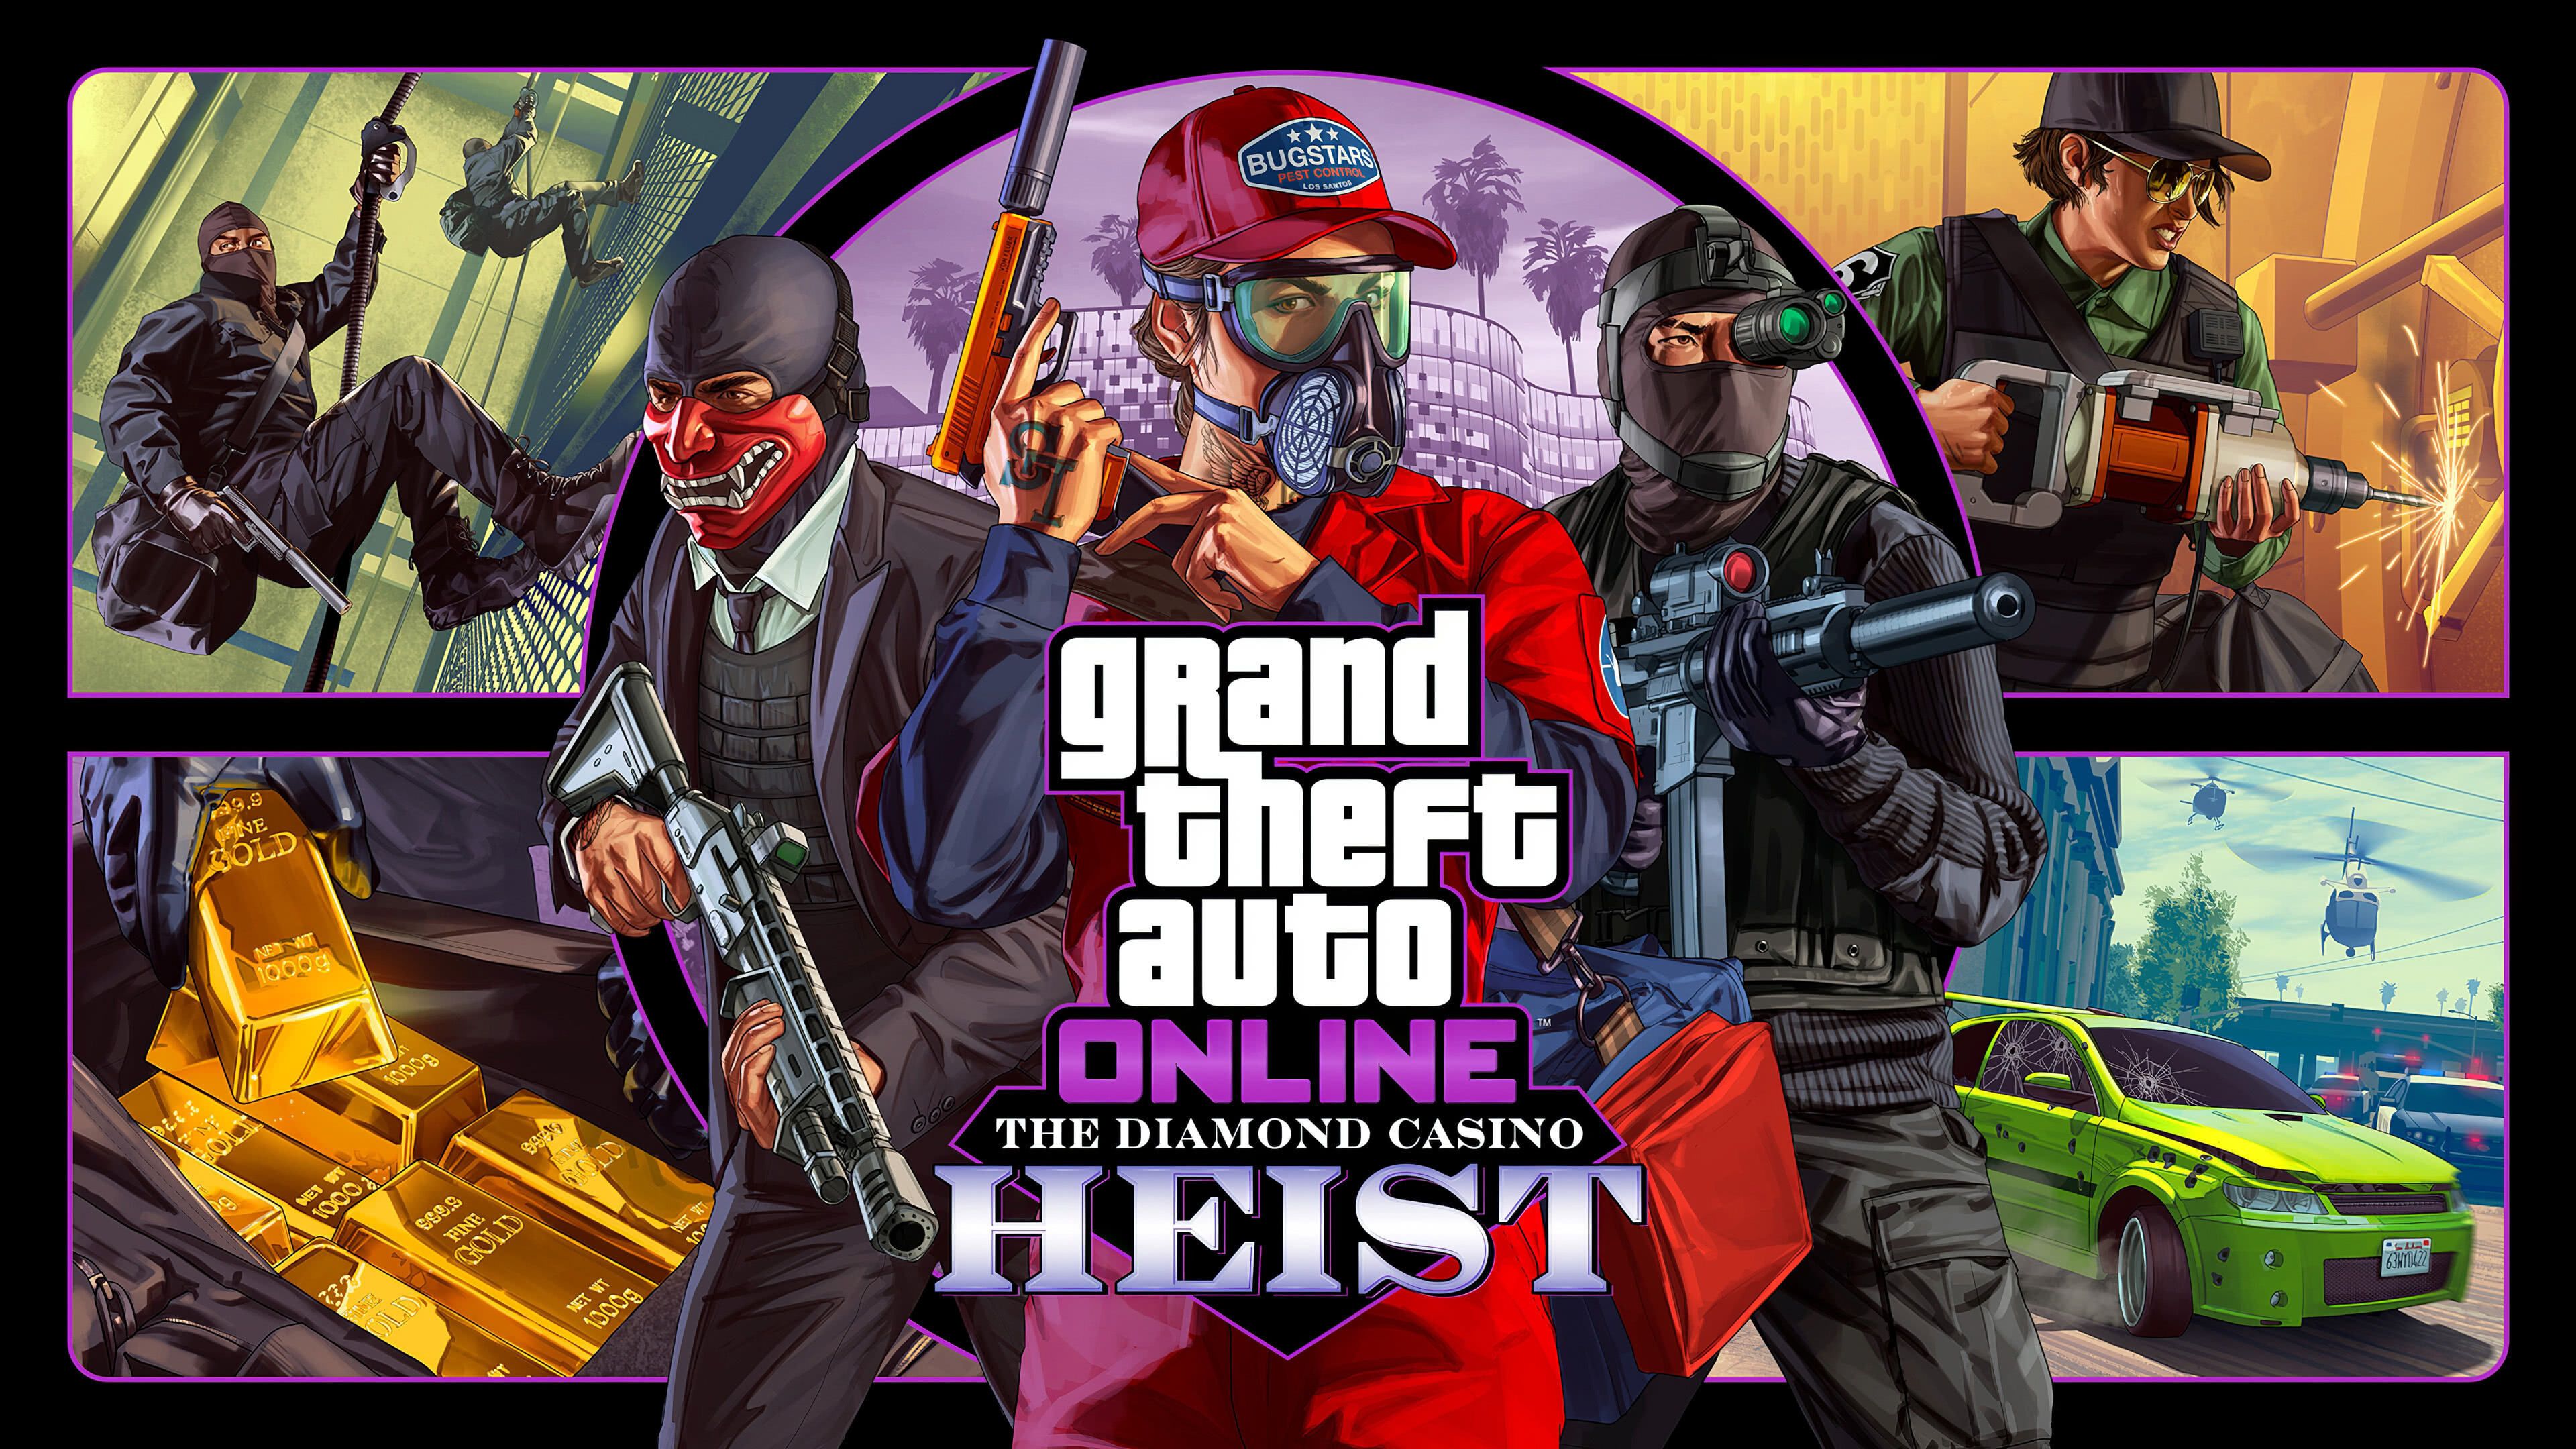 Grand Theft Auto 5 Online The Diamond Casino Heist UHD 4K Wallpaper